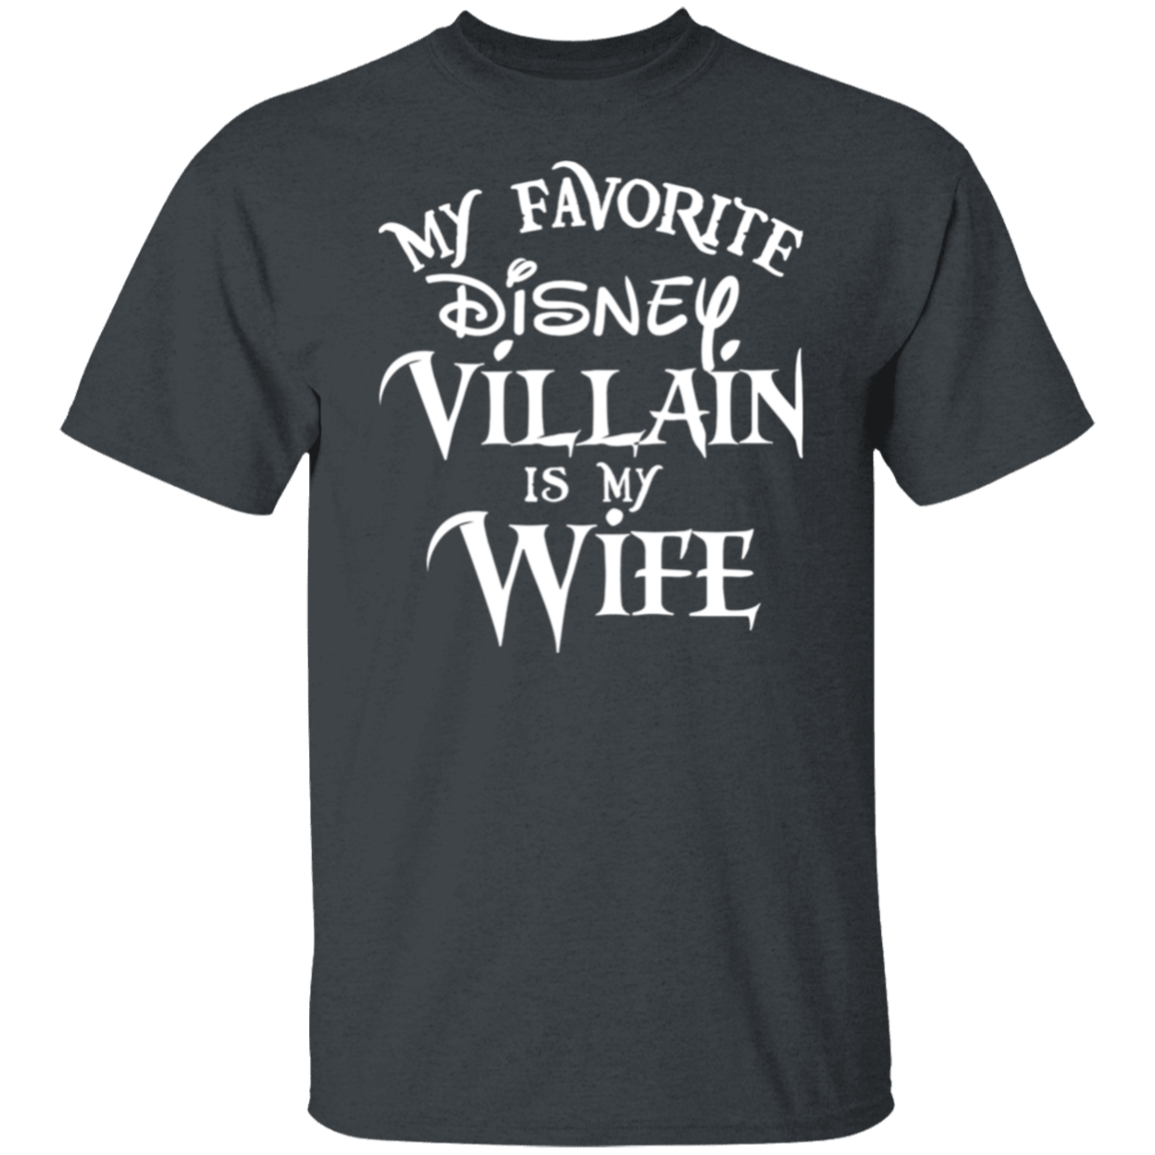 Husband & Wife Vacation Disney Trip Villain T-Shirt (Sold Separately)